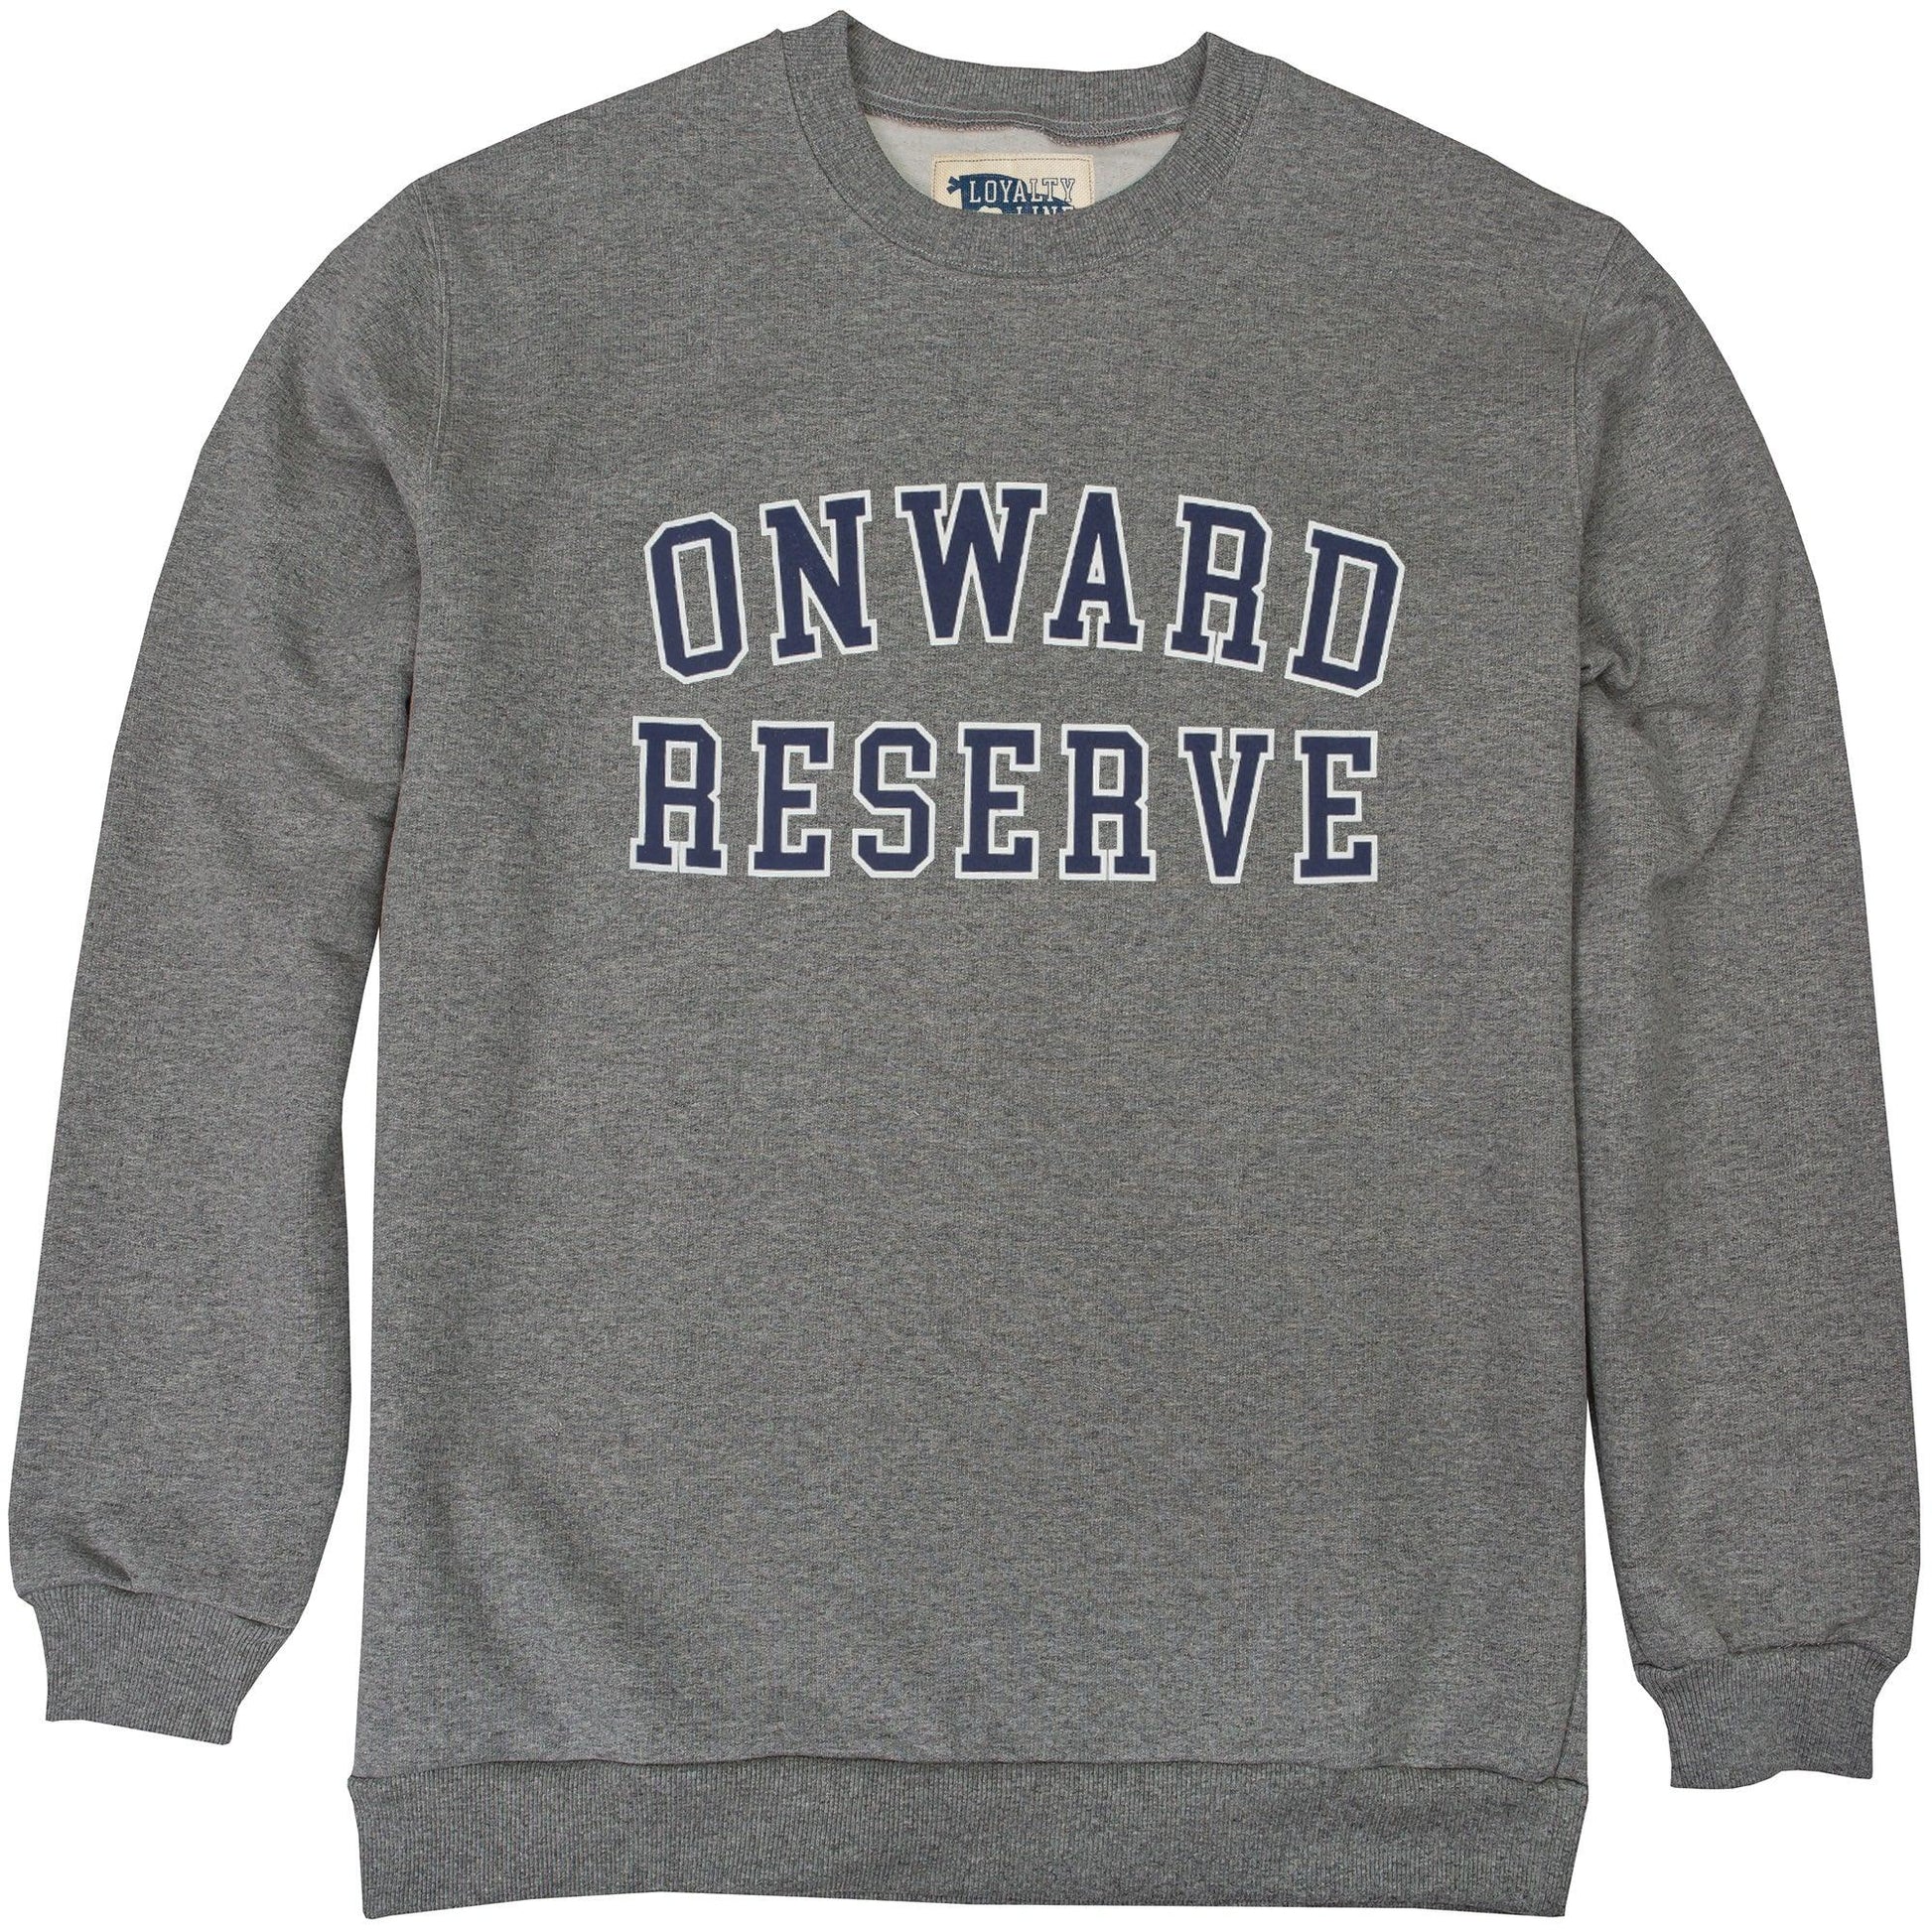 Onward Reserve Loyalty Vintage Crew Neck Sweatshirt